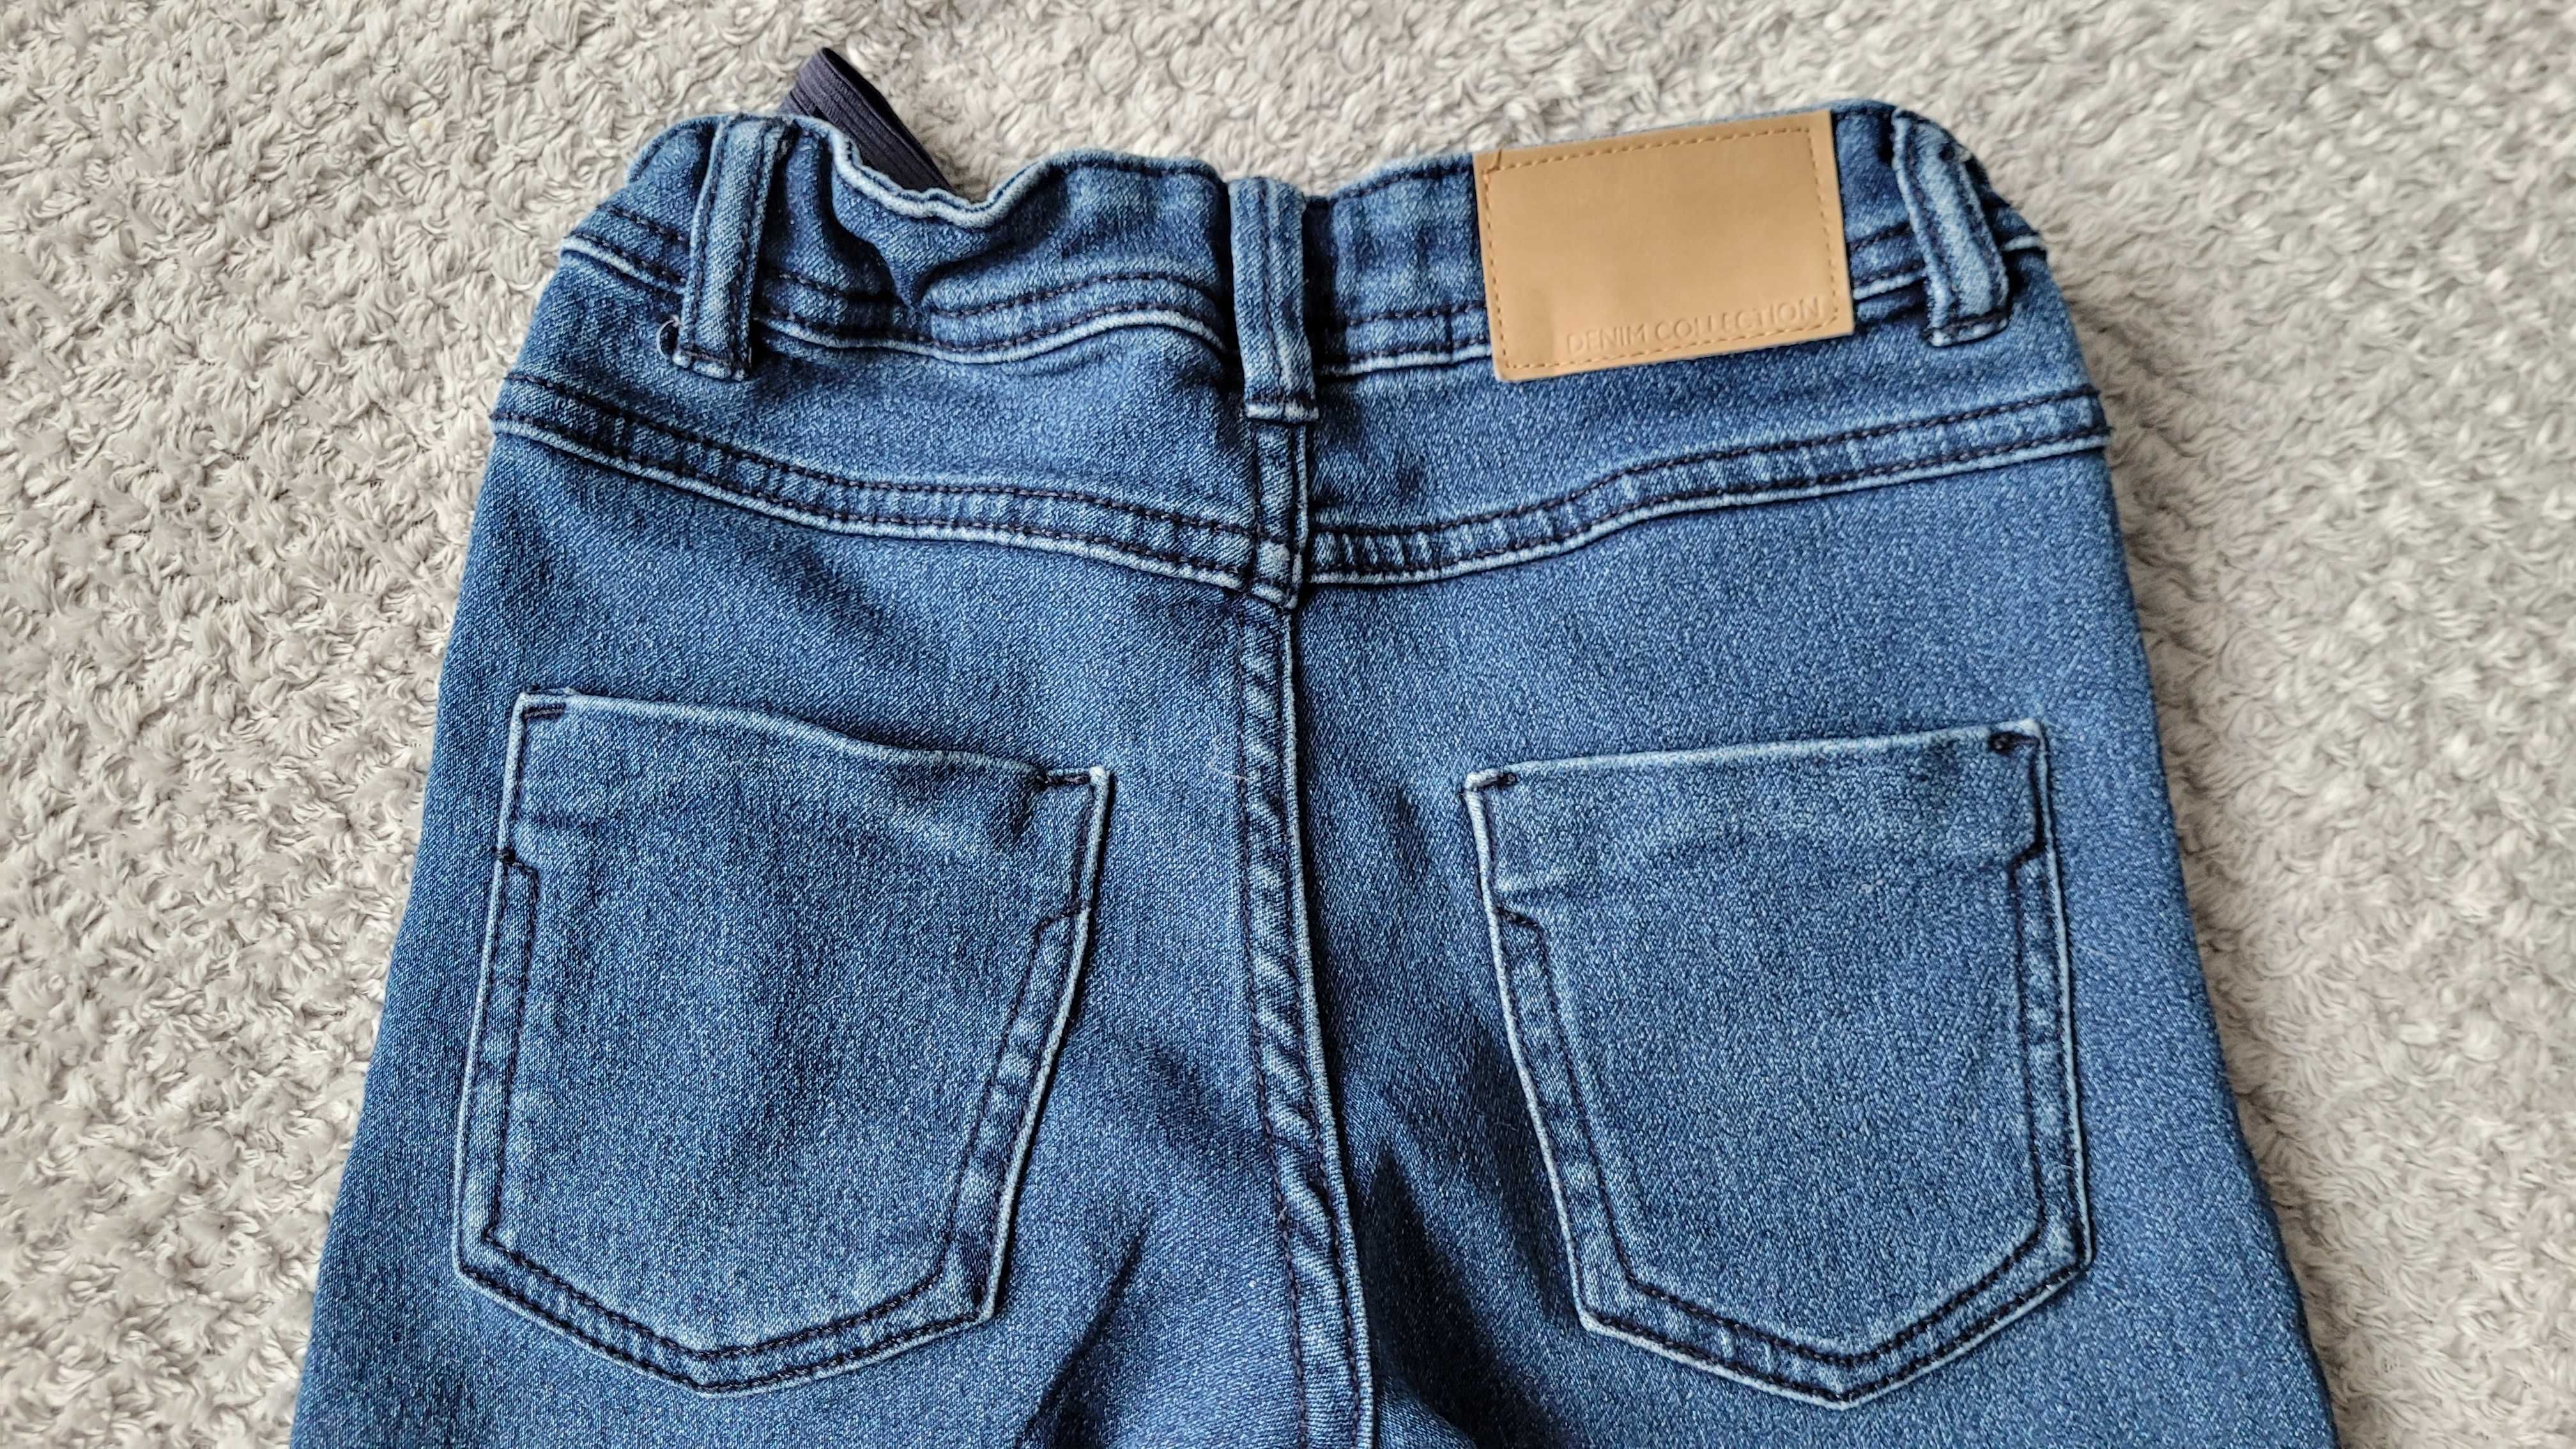 Spodnie jeansy z regulacją w pasie, rozmiar 110, Sinsay